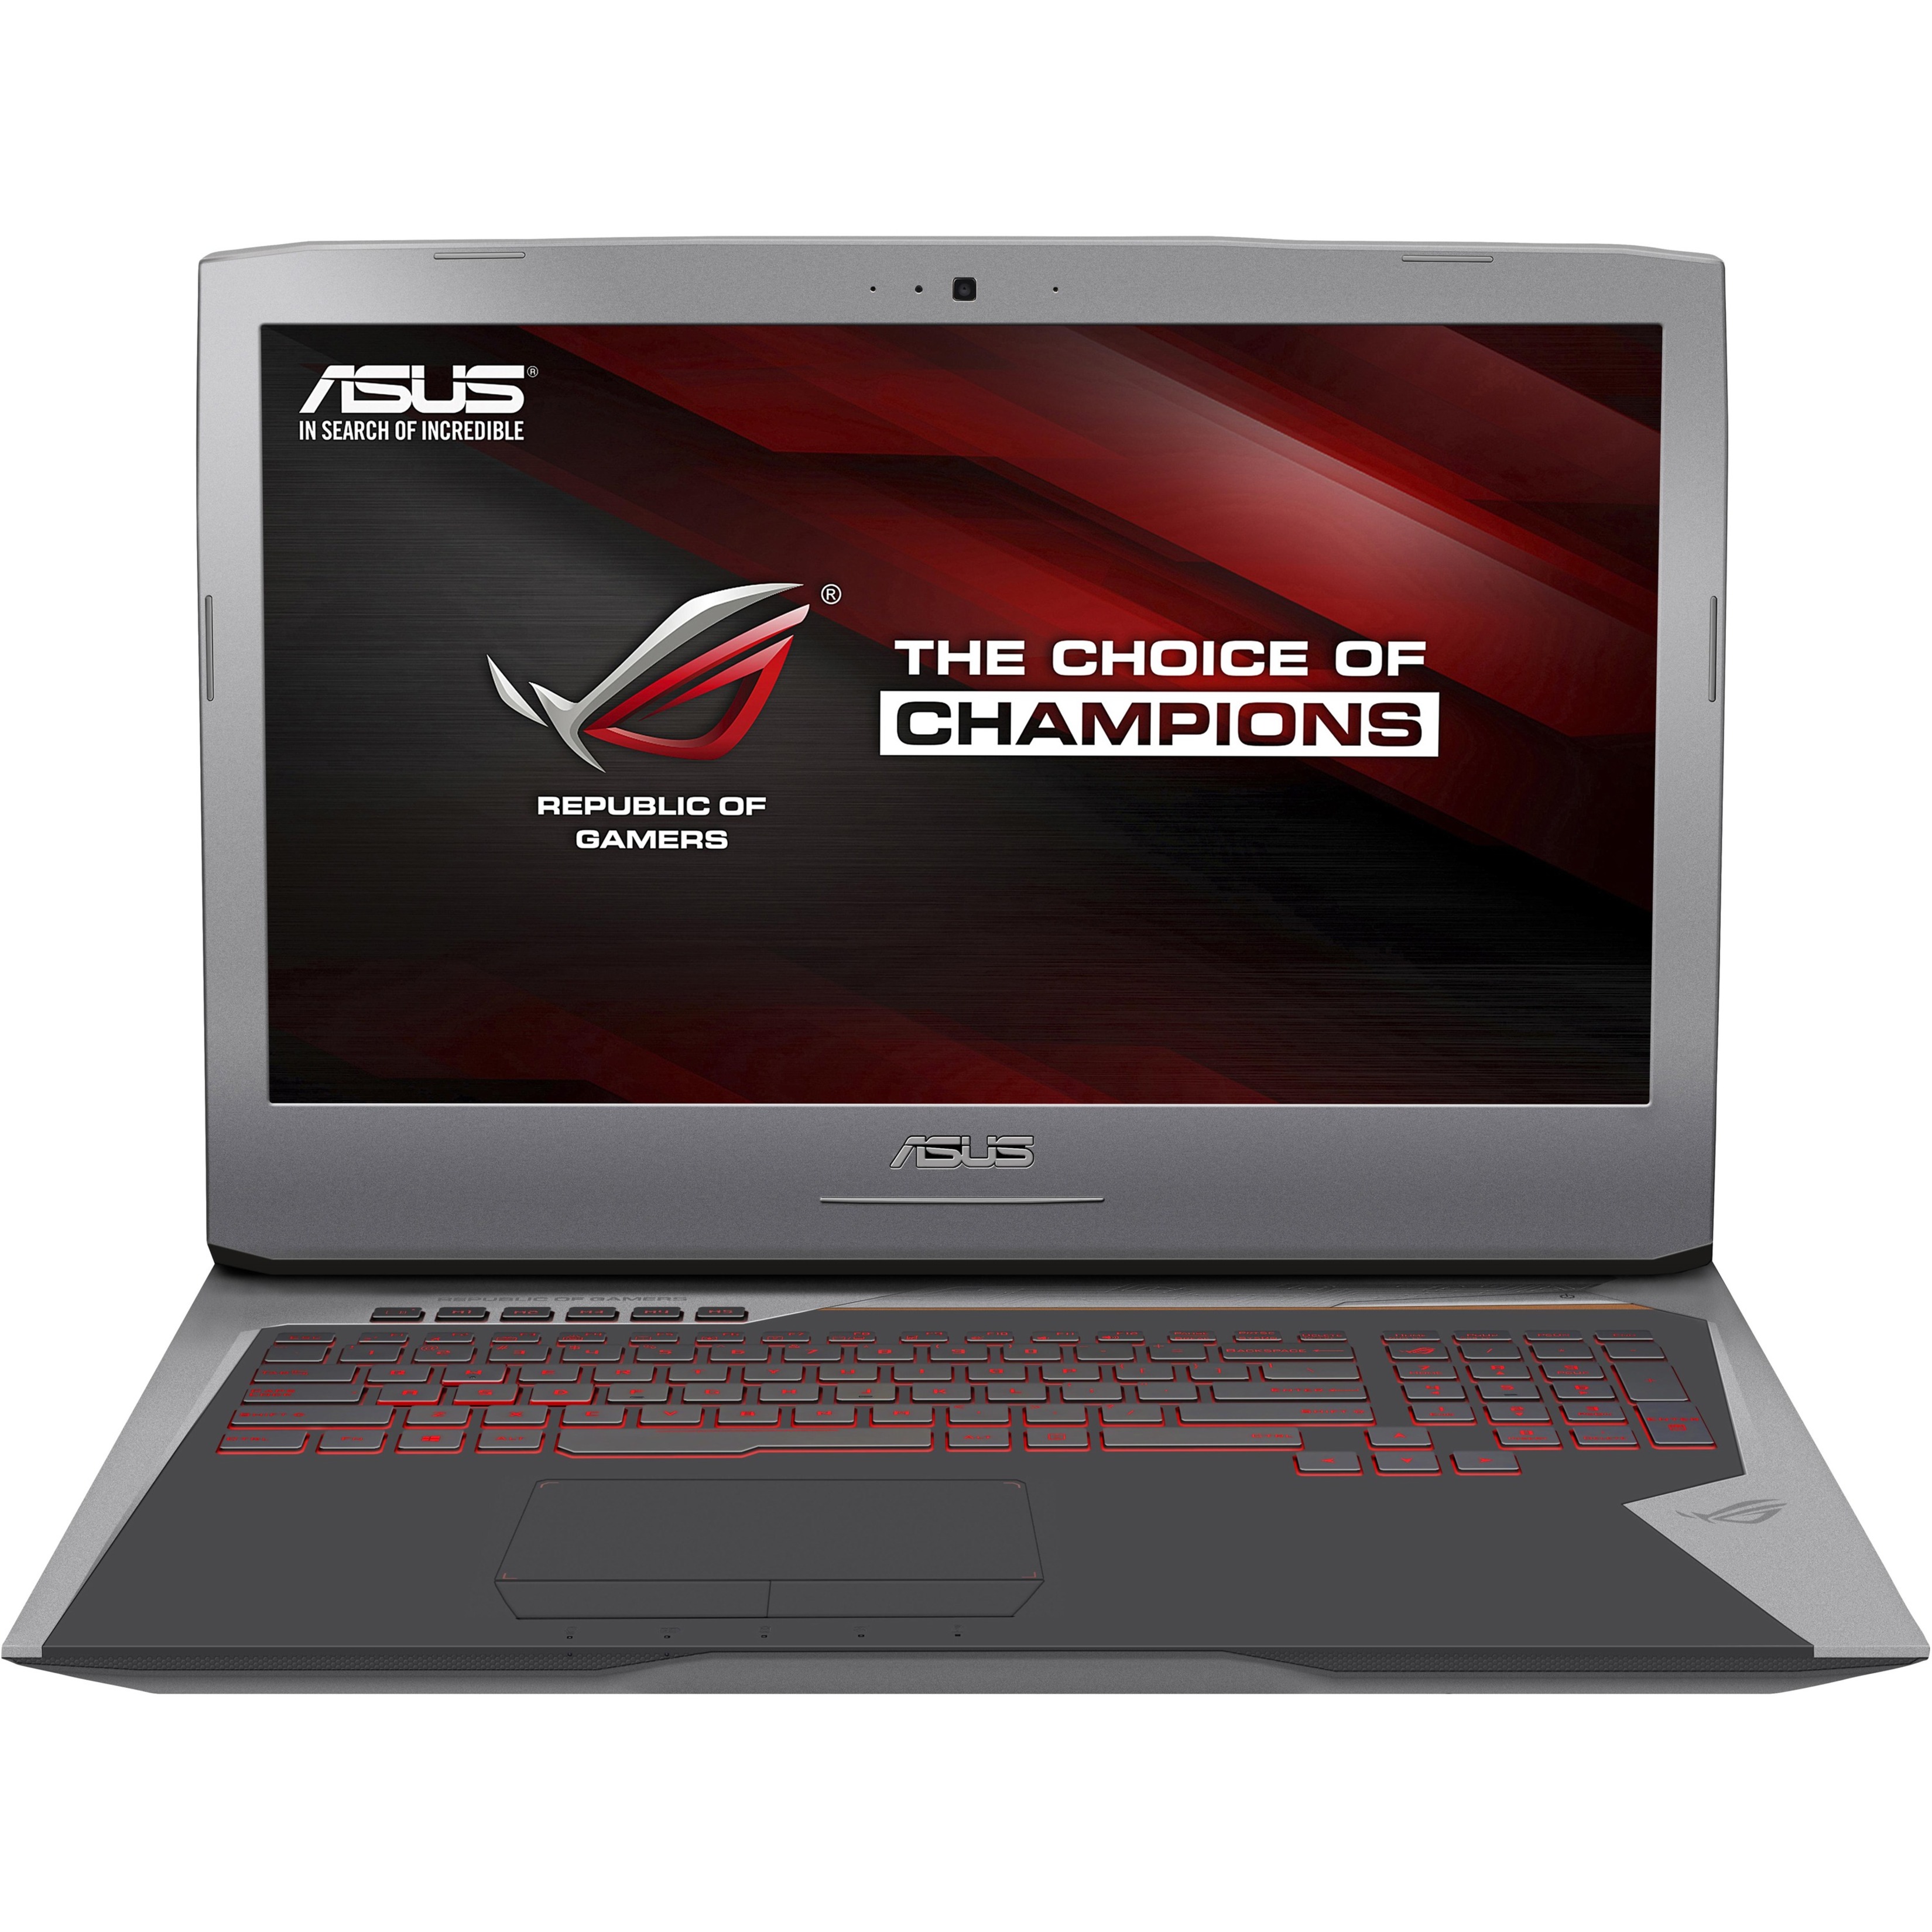 ASUS ROG G752VT-DH72 17 Inch Gaming Laptop, Nvidia GeForce GTX 970M 3 GB VRAM, 16 GB DDR4, 1 TB, 128 GB NVMe SSD - image 1 of 6